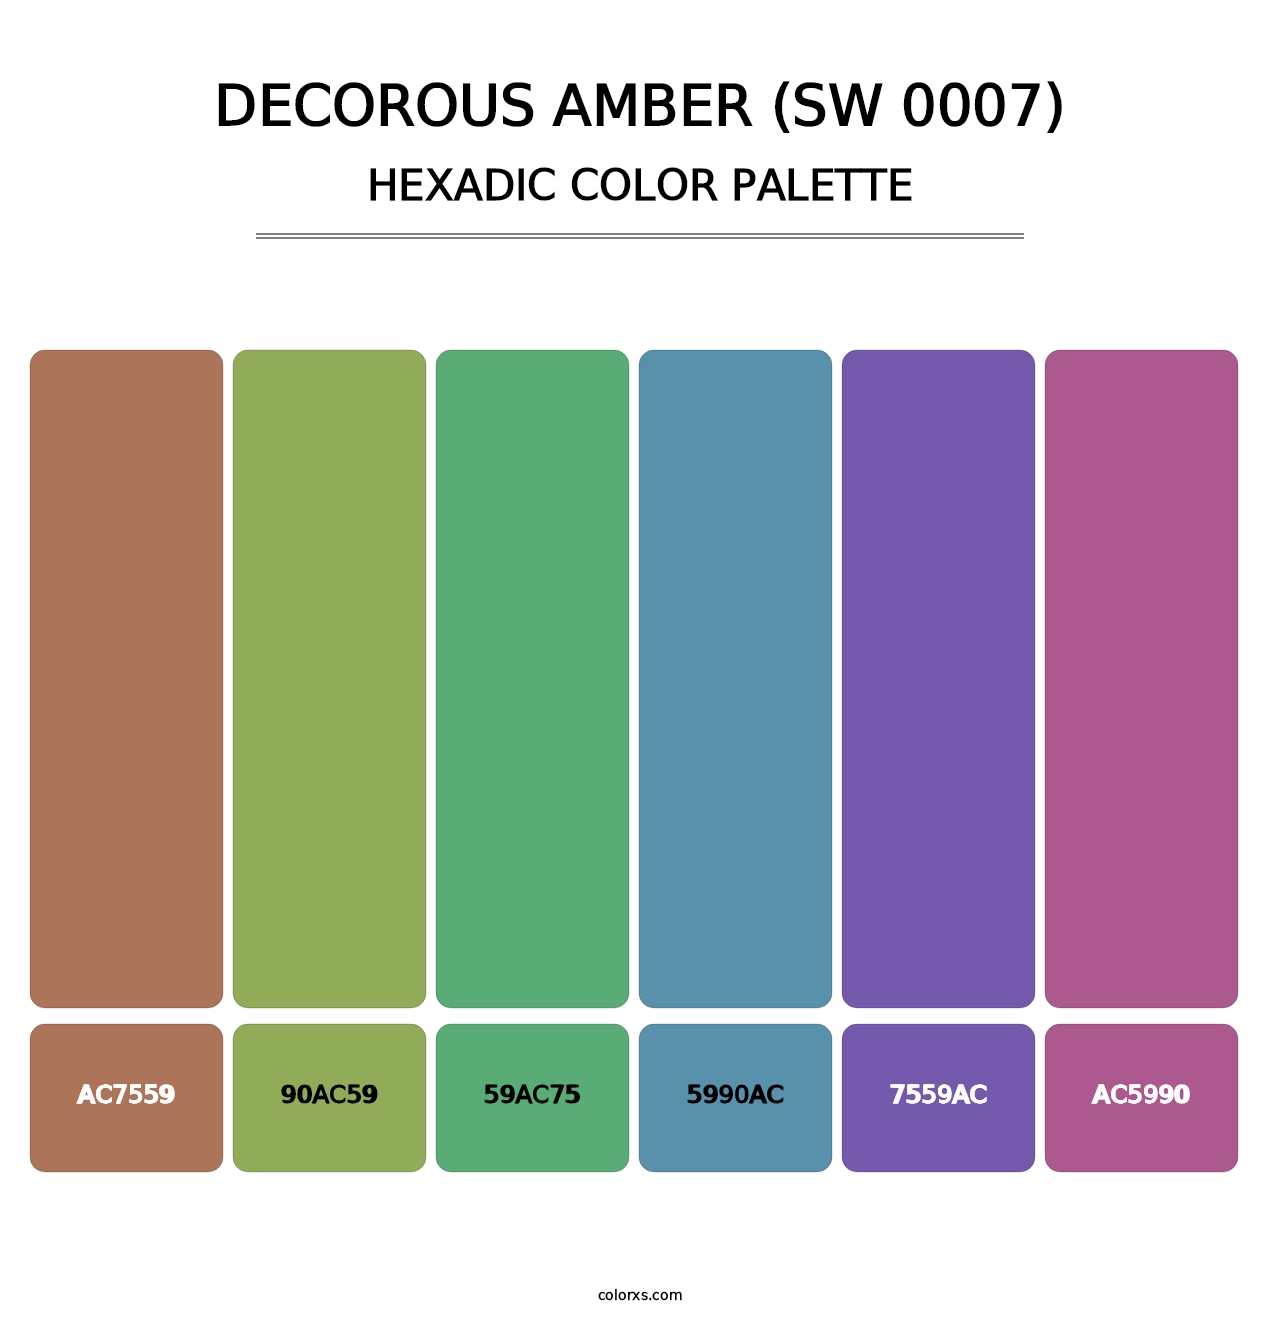 Decorous Amber (SW 0007) - Hexadic Color Palette